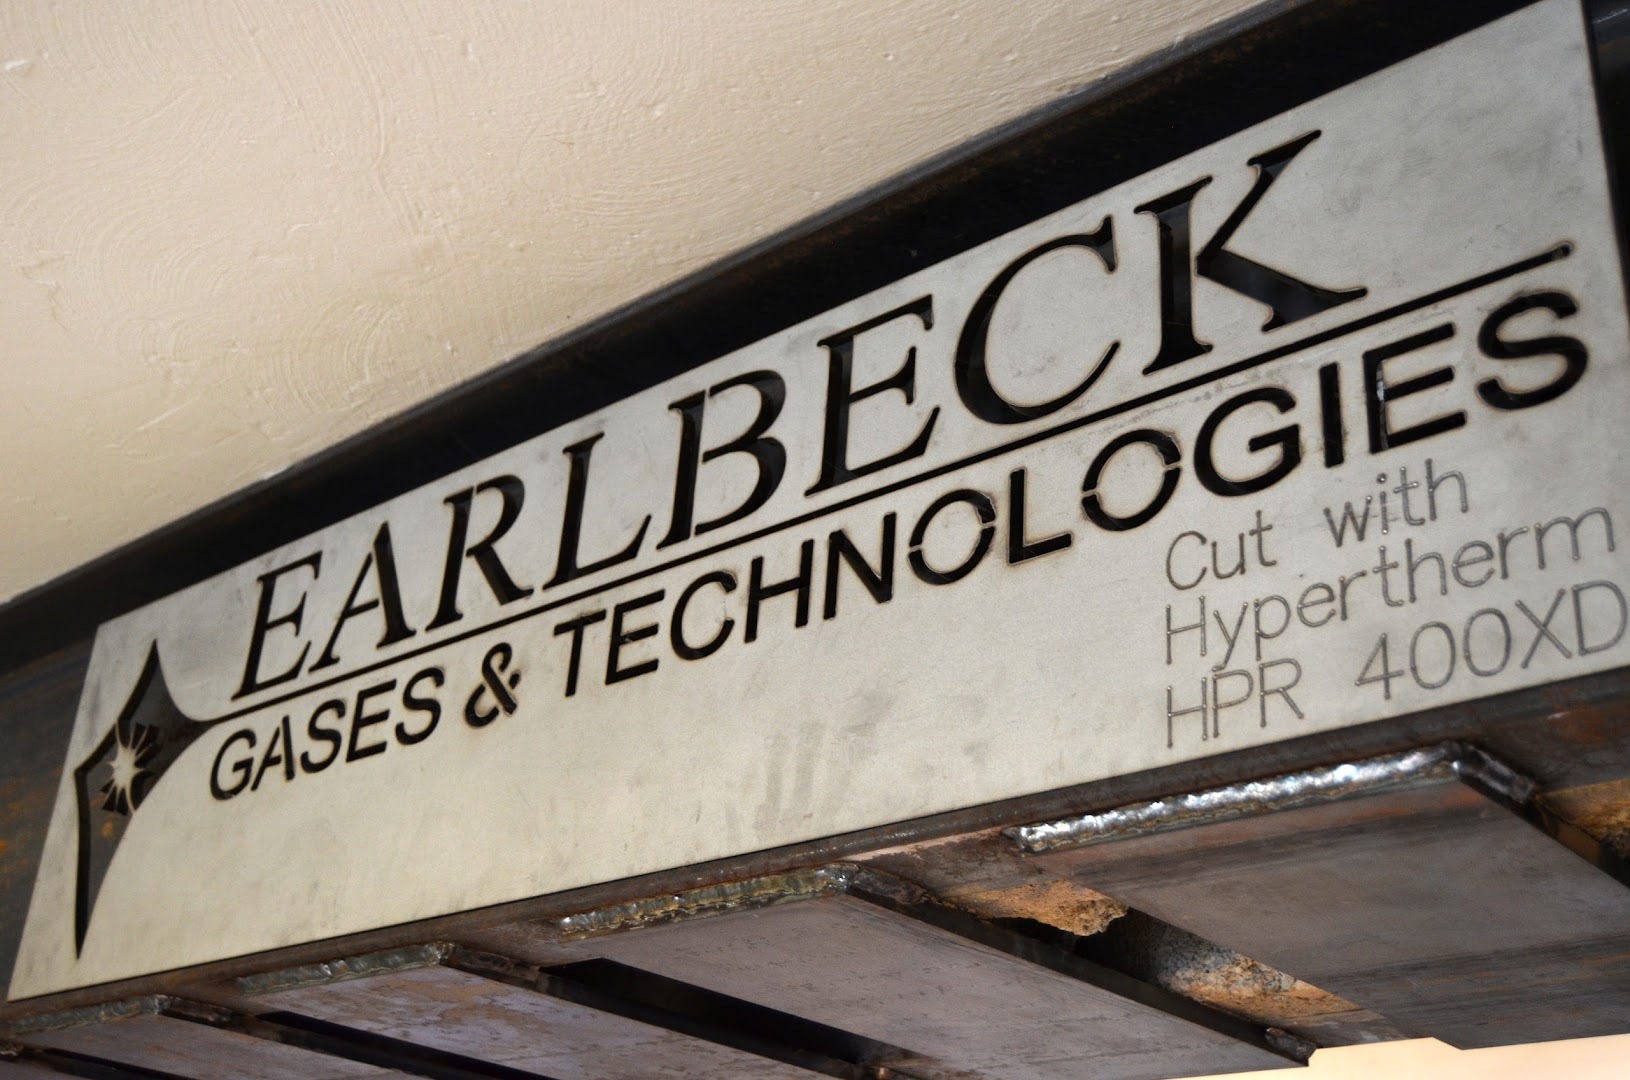 Earlbeck Gases & Technologies - Baltimore - 14